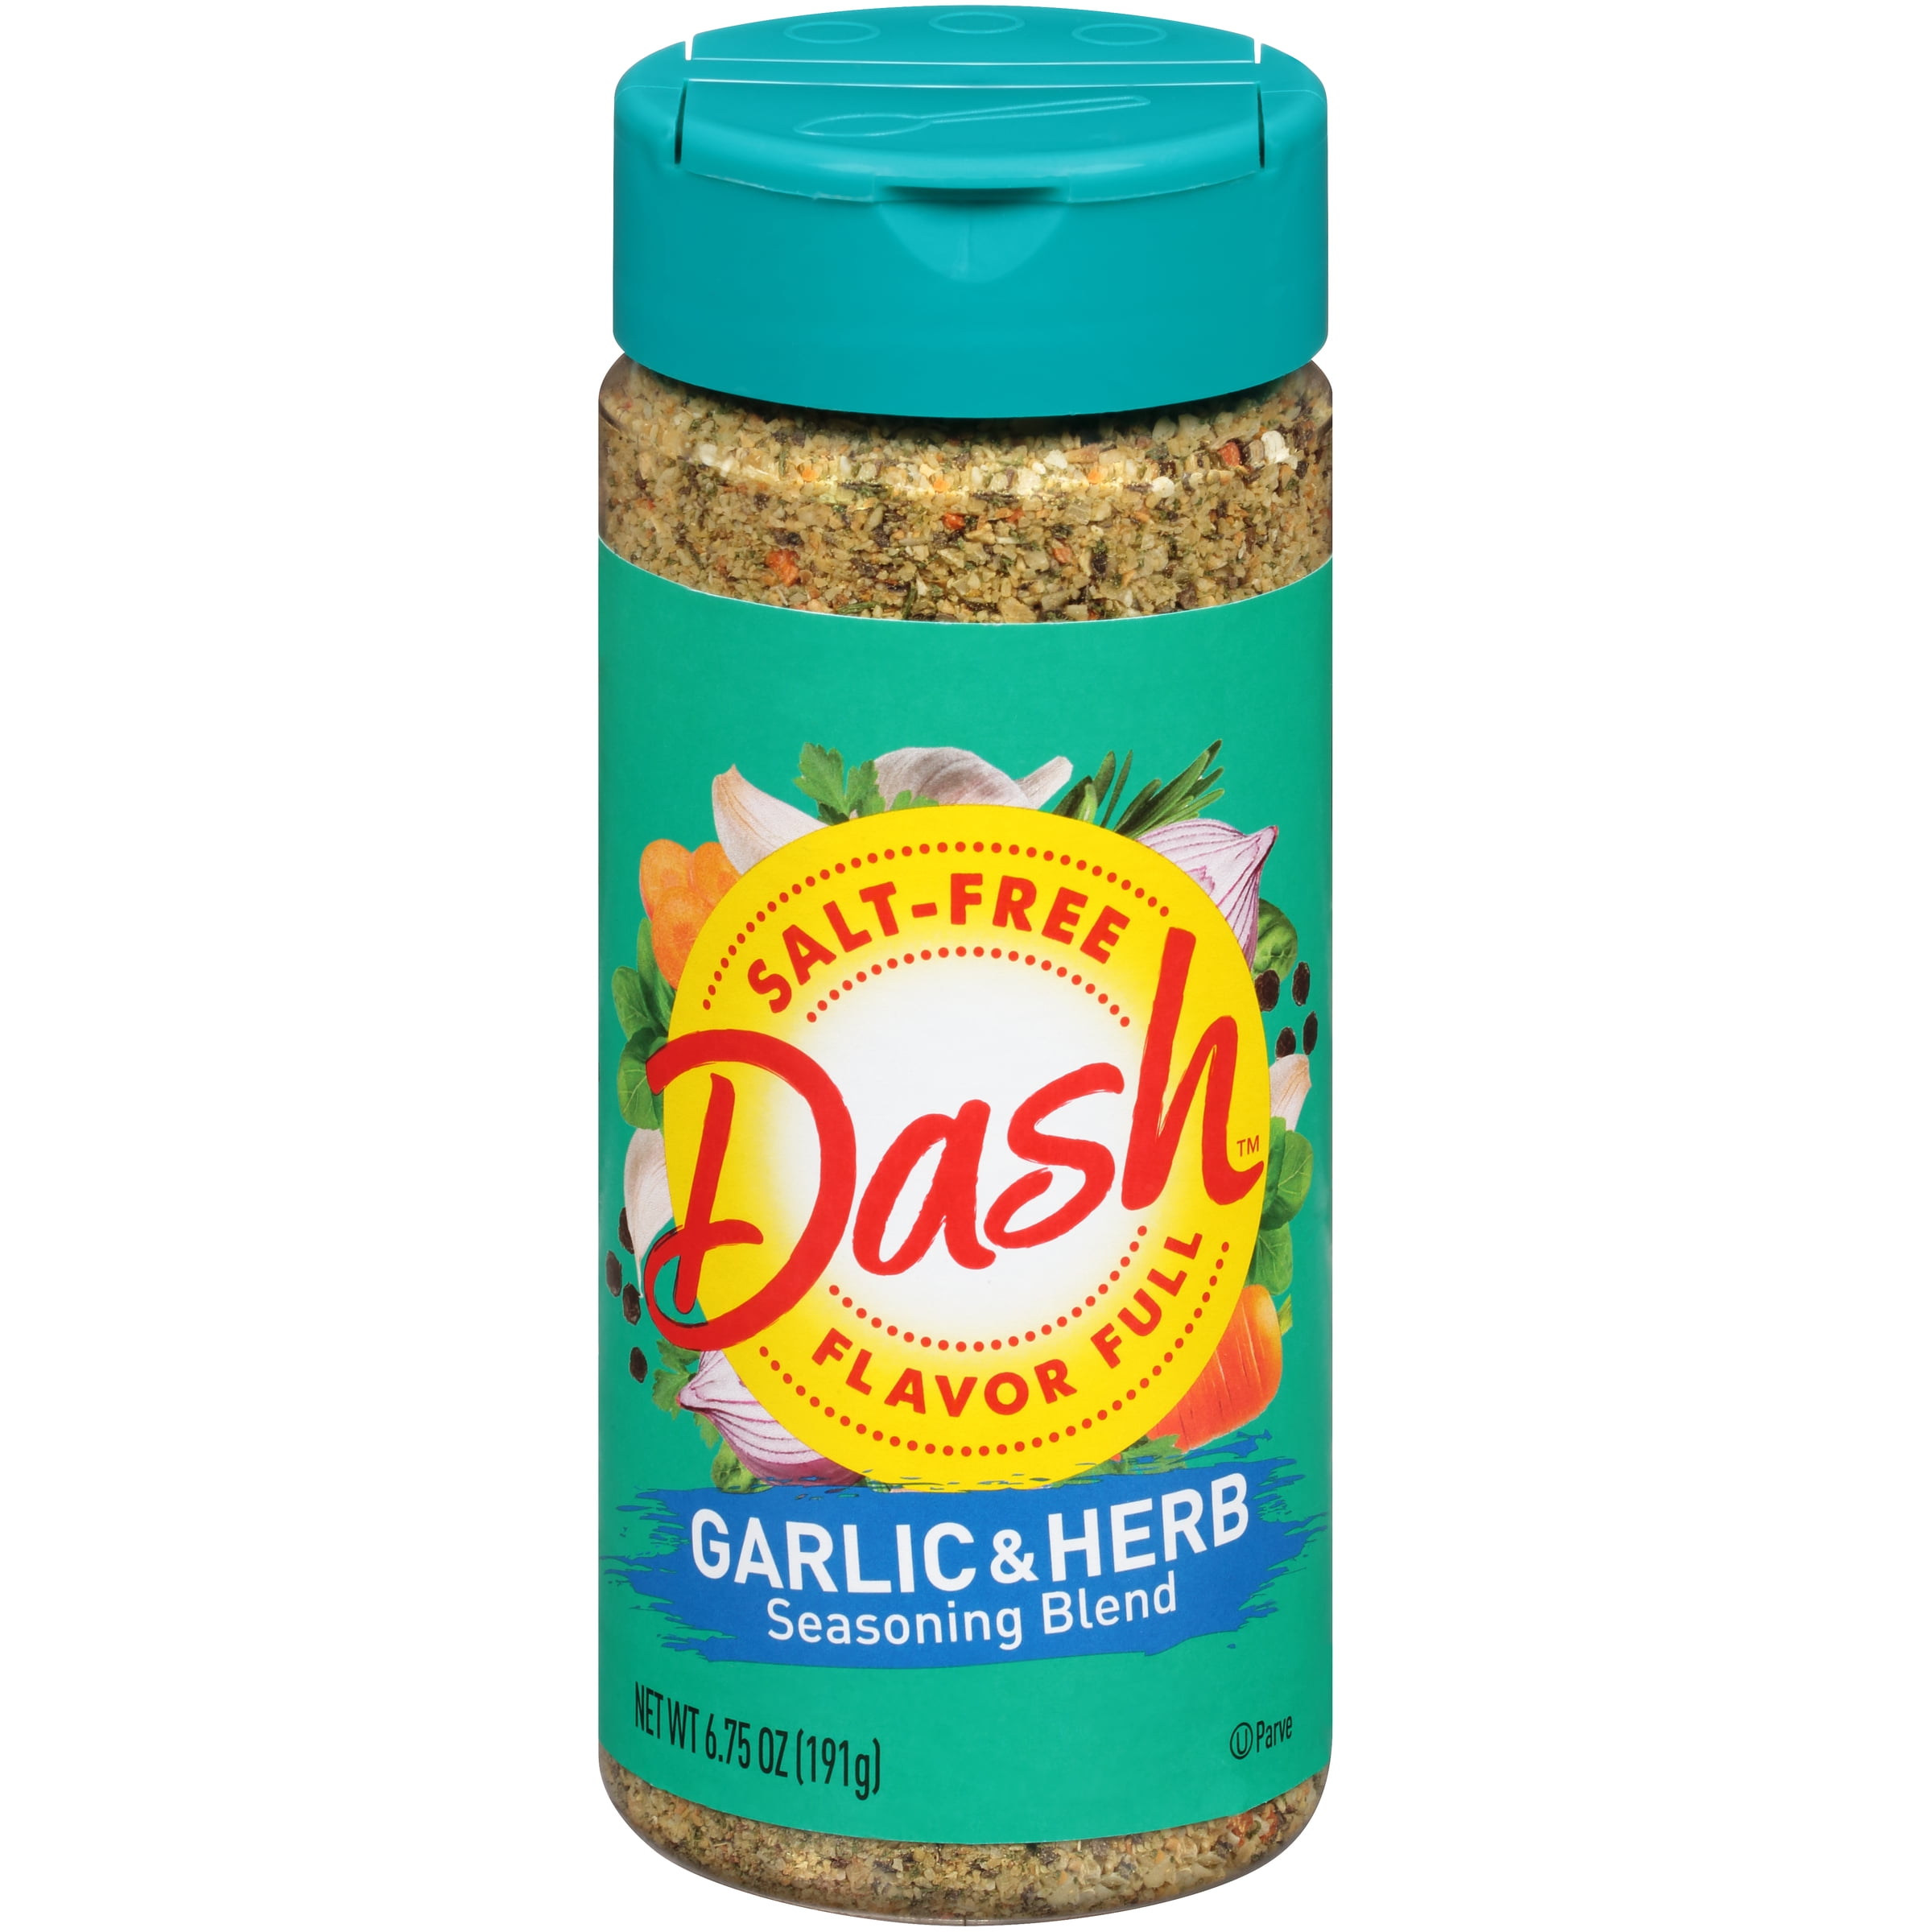 Buy Garlic Herb Seasoning Online - Free Shipping Available!